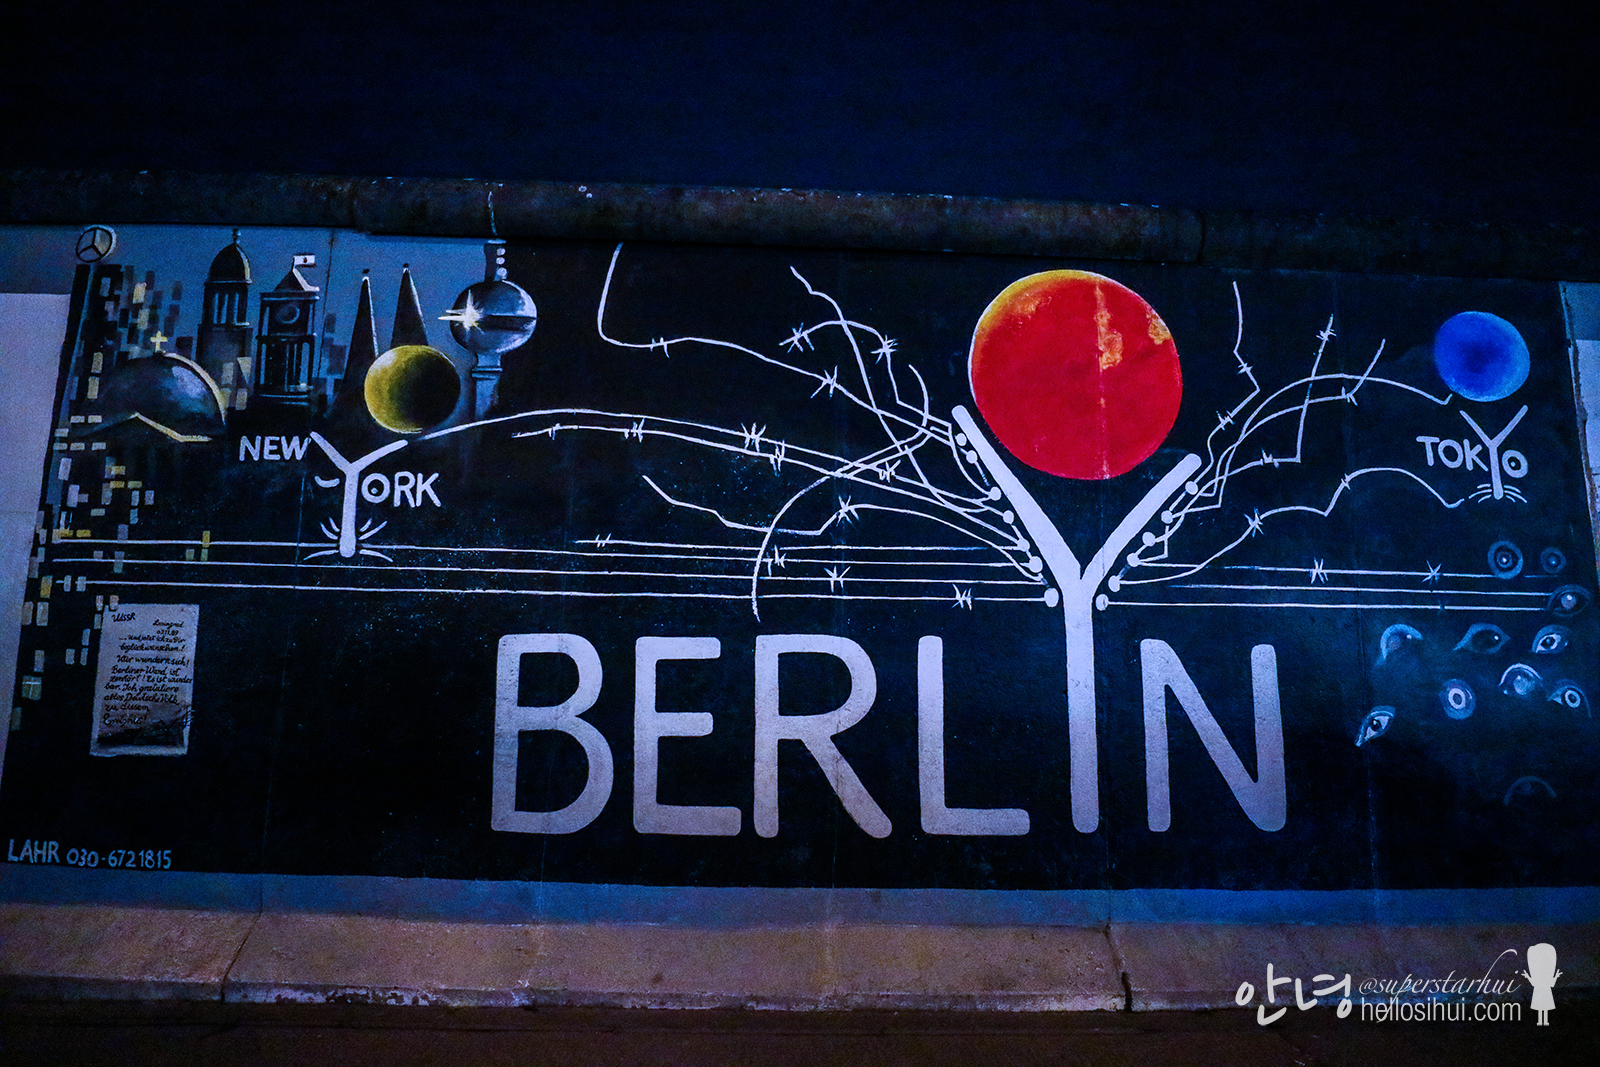 Europe 2018/2019 Day 2: Berlin – Berlin Wall Graffiti Art + Weihnachtszauber Christmas Market